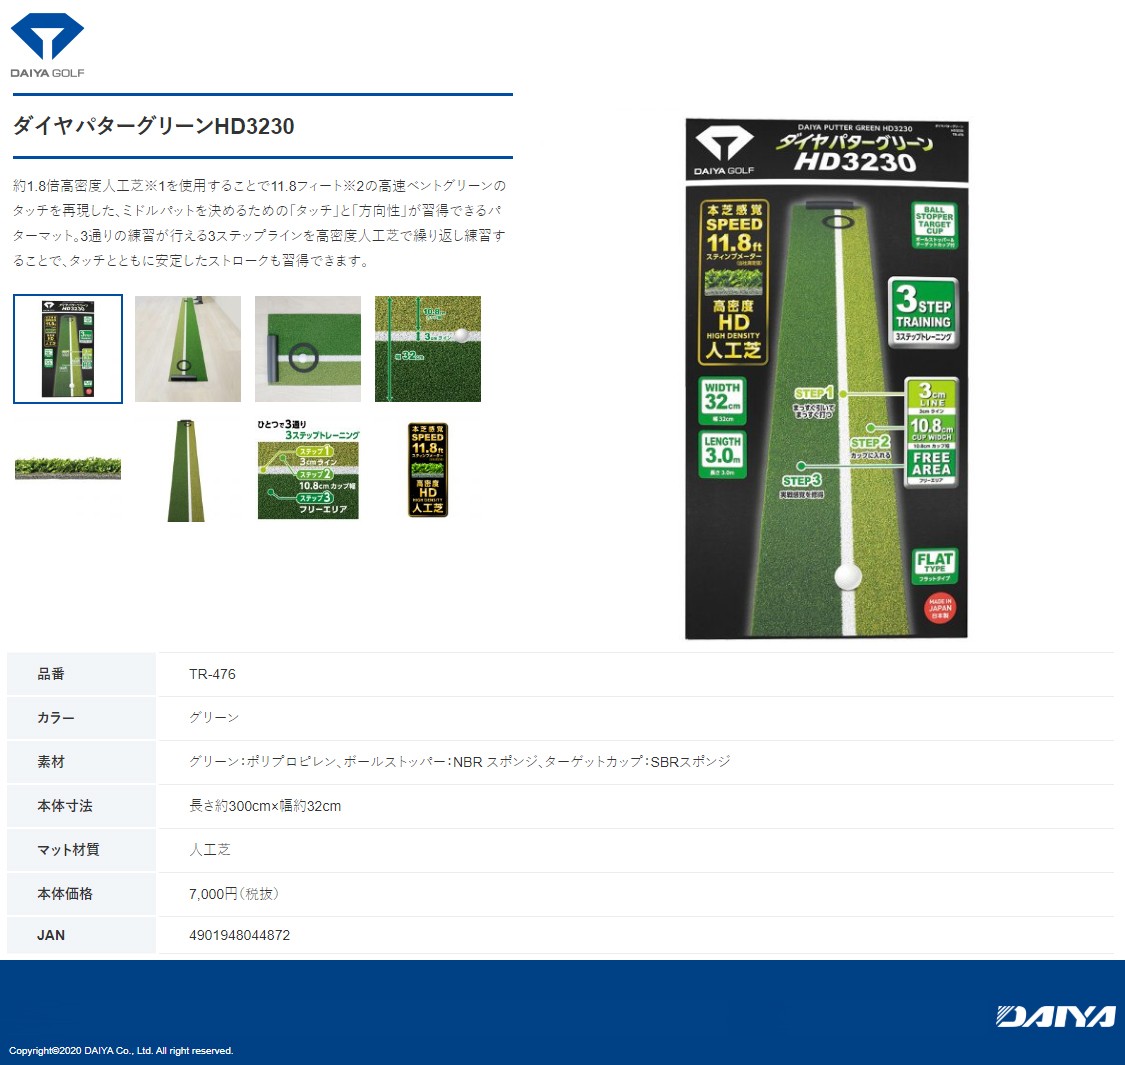 DAIYA GOLF(ダイヤゴルフ)日本正規品 ダイヤパターグリーンHD3230 パターマット 「TR-476」 「ゴルフパター練習用品」 EZAKI  NET GOLF - 通販 - PayPayモール